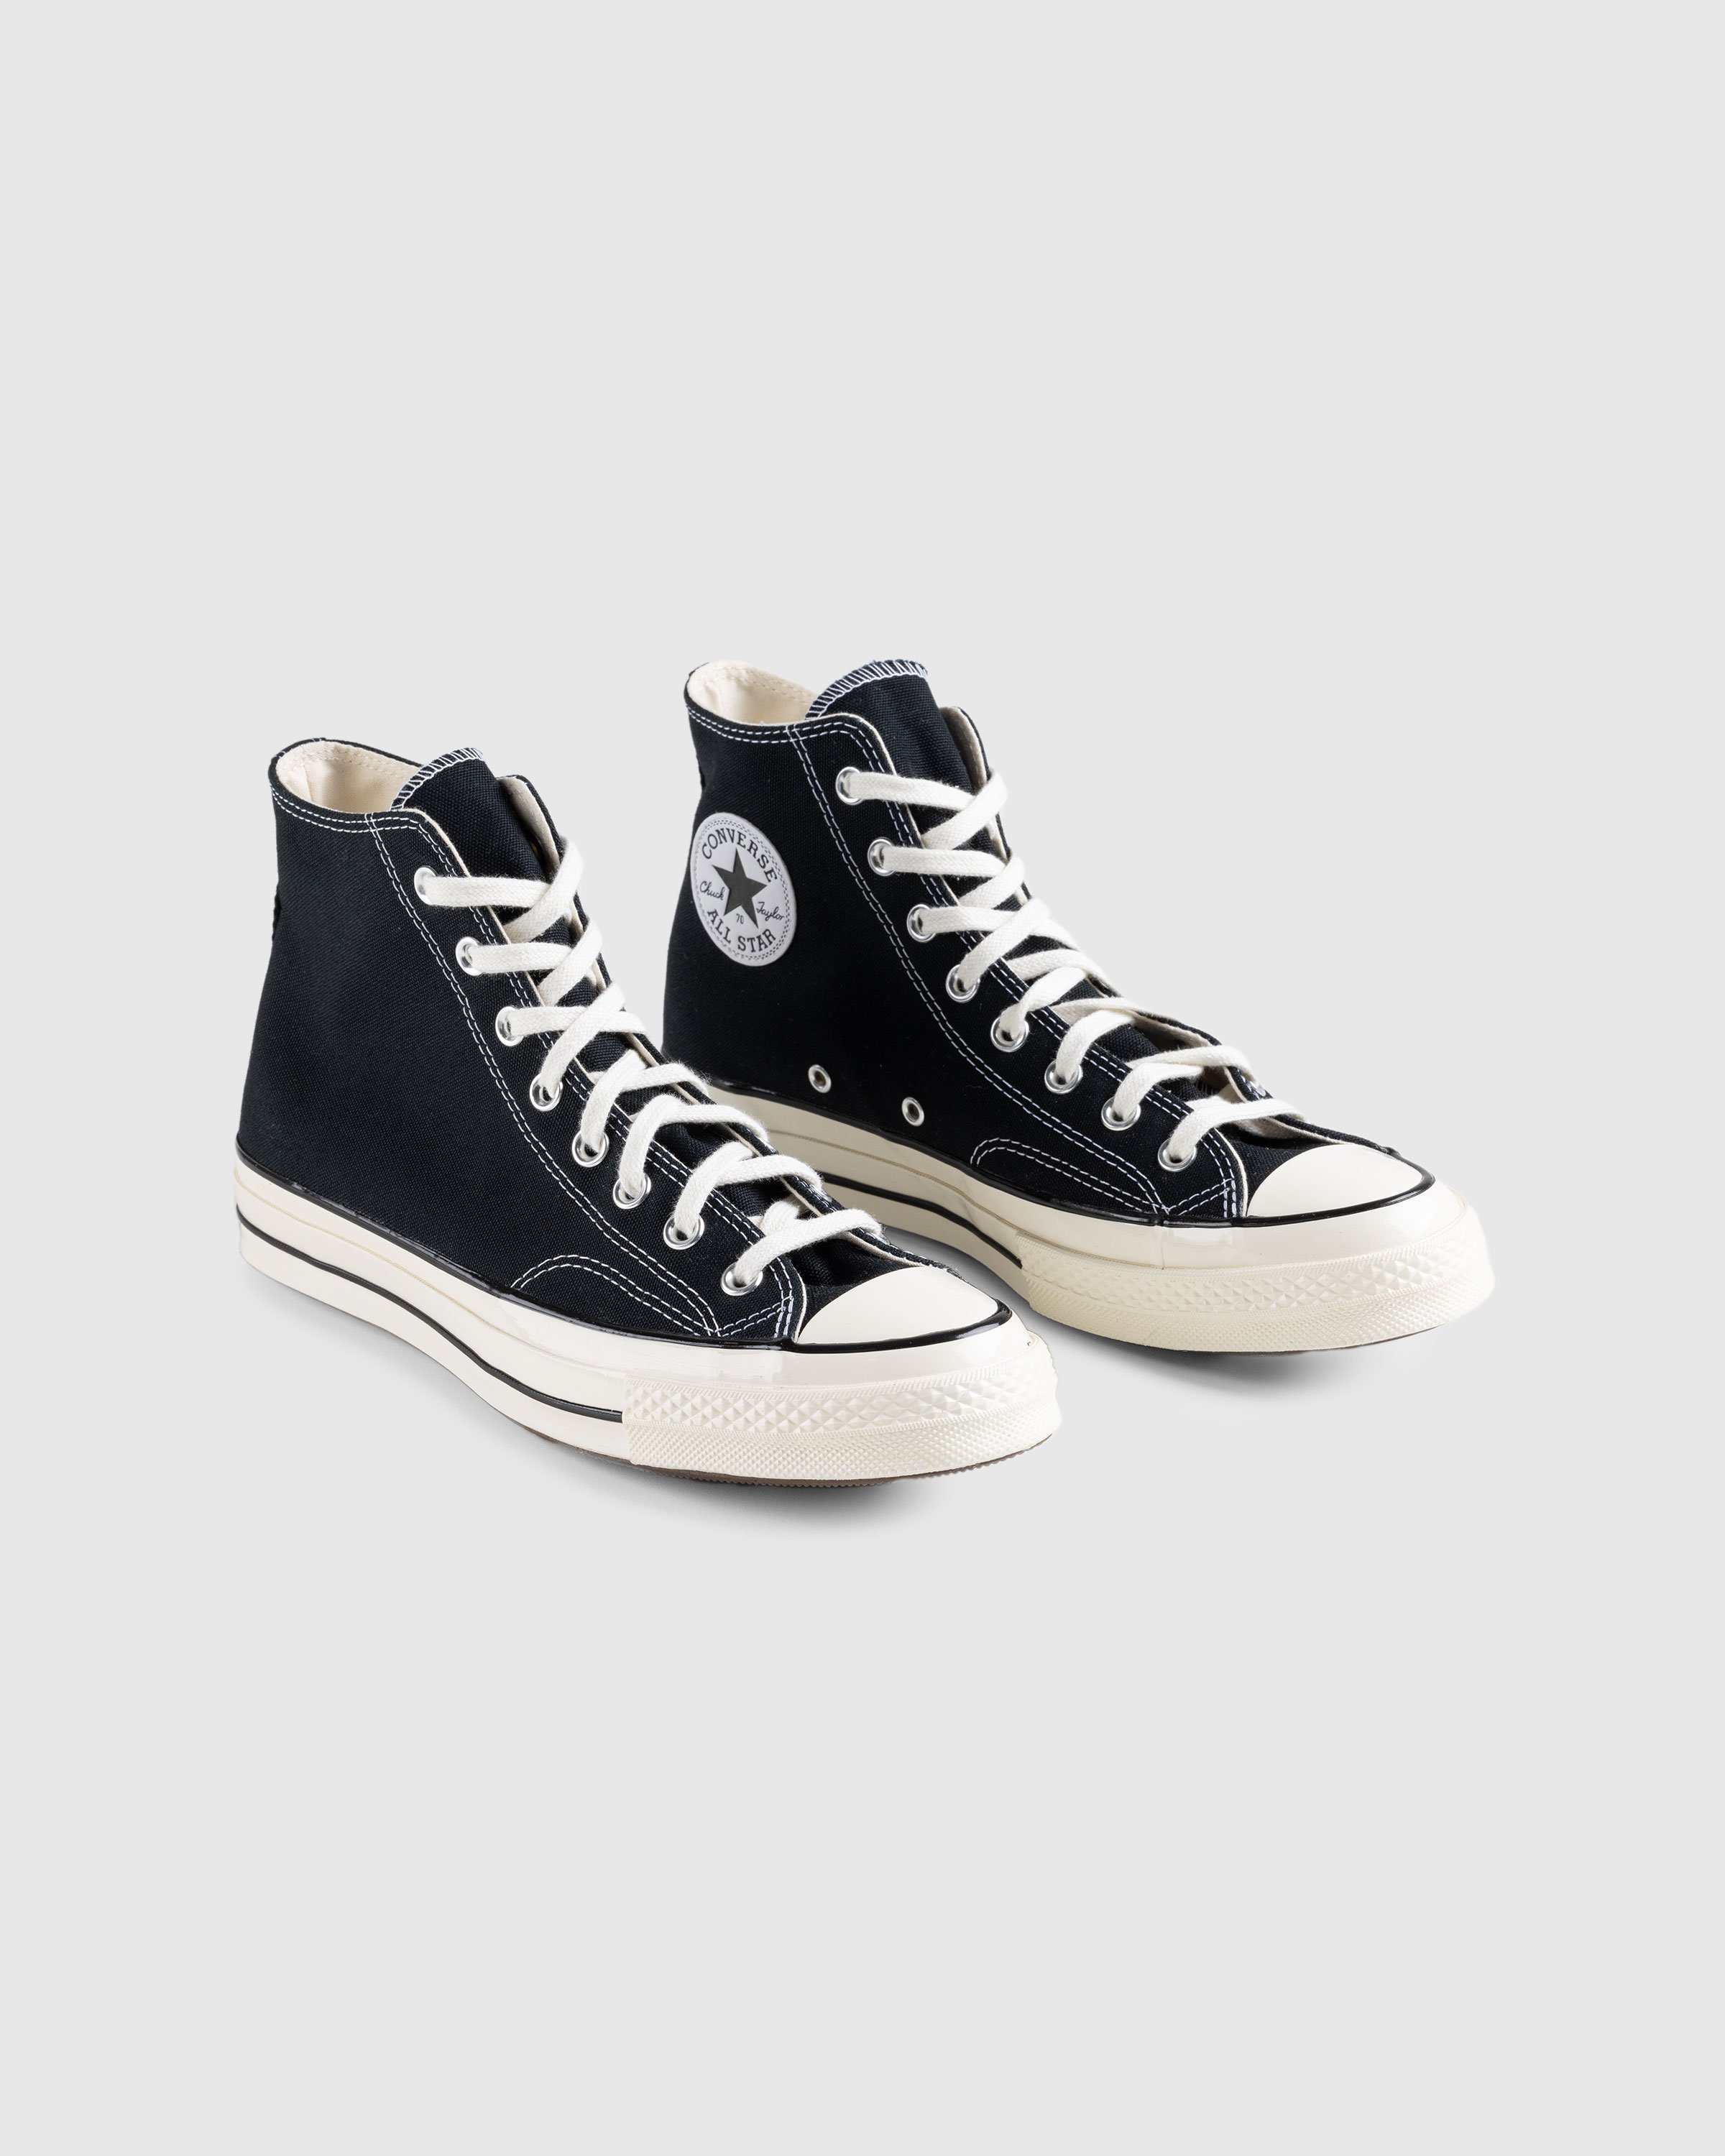 Converse - Chuck 70 Hi Black/Black/Egret - Footwear - Black - Image 3